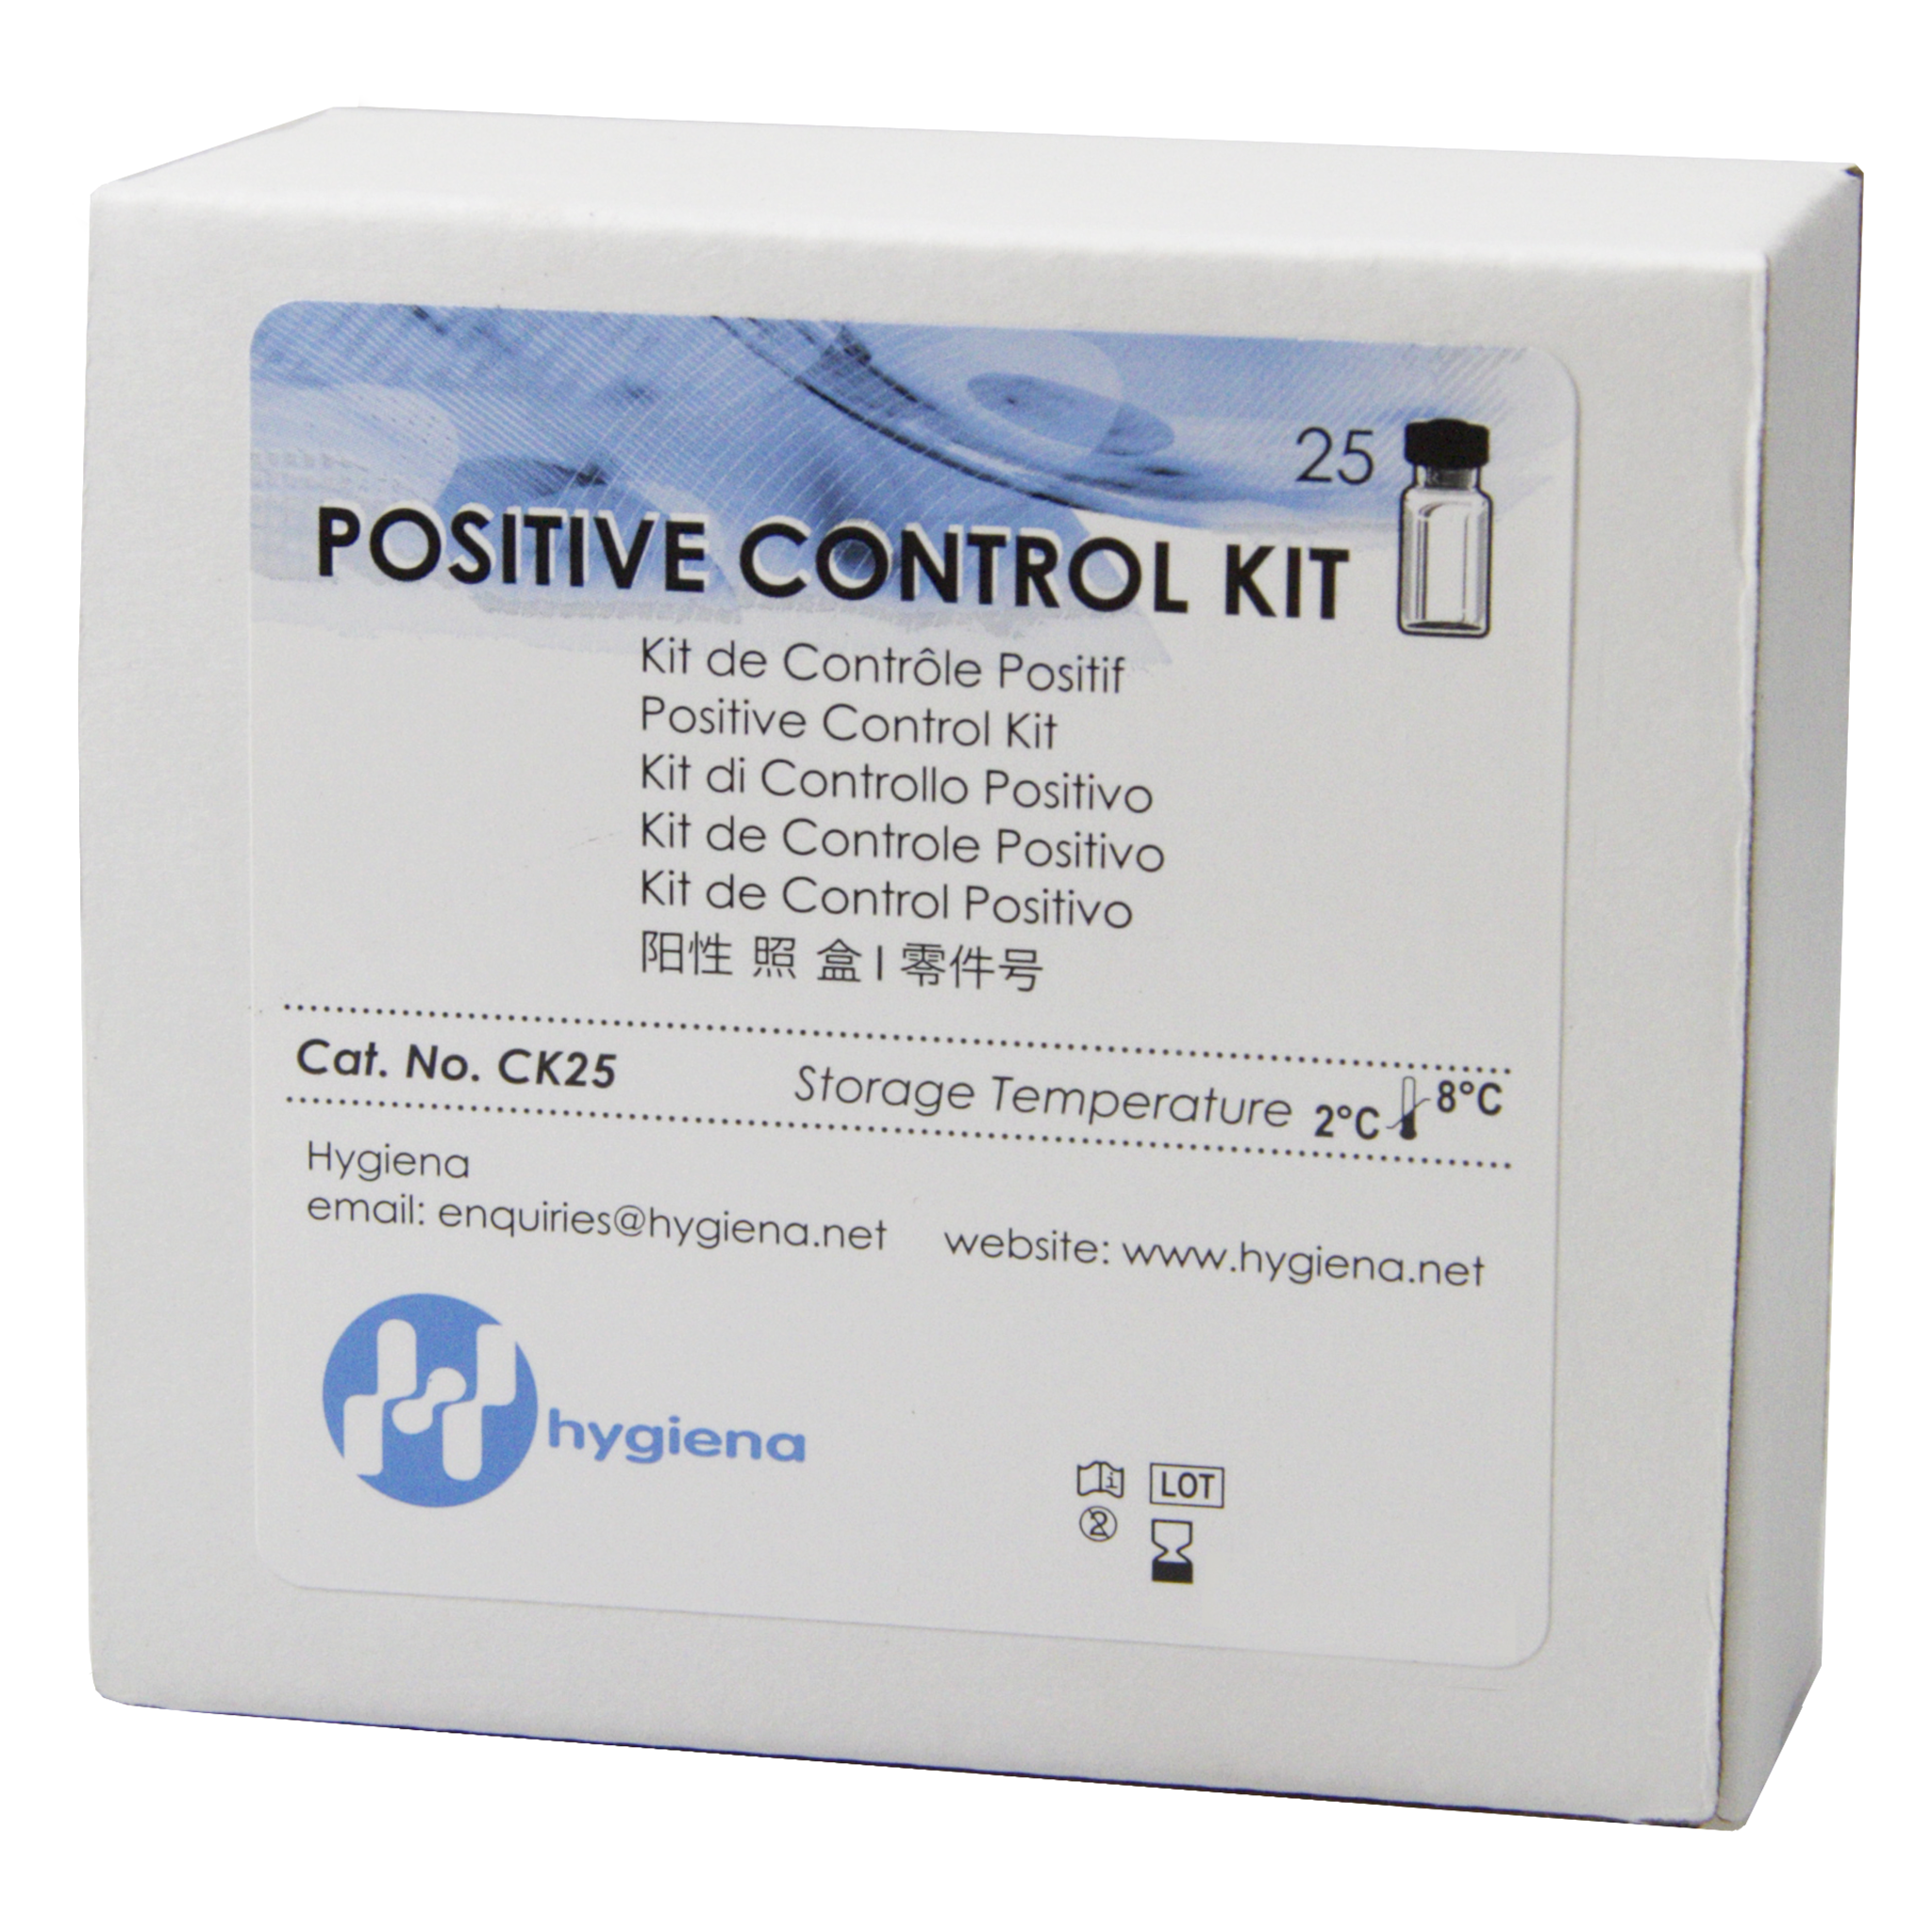 Positive Control Kit